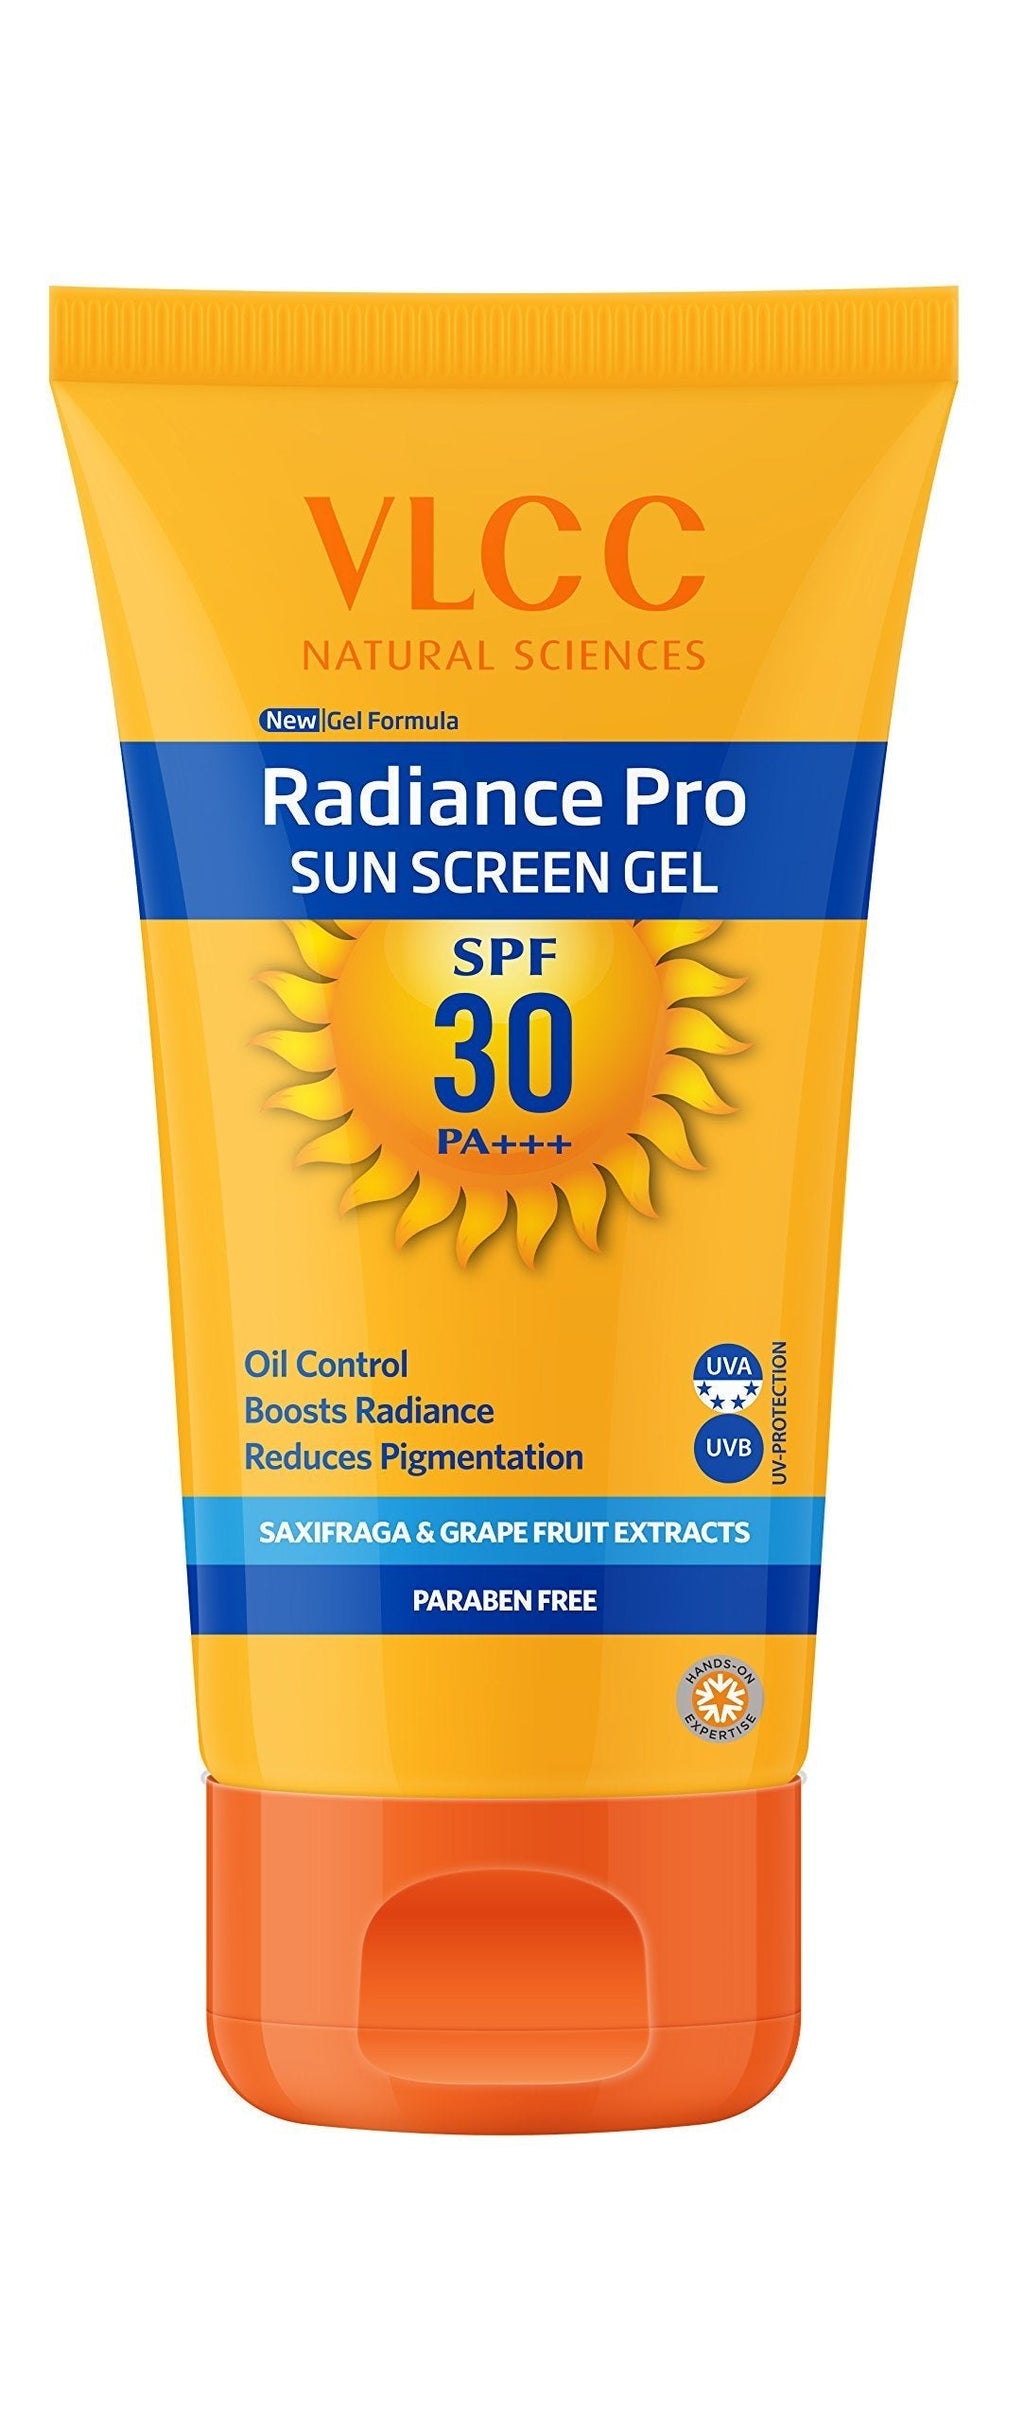 [Australia] - VLCC Radiance Pro SPF 30 Sun Screen Gel, 100g 